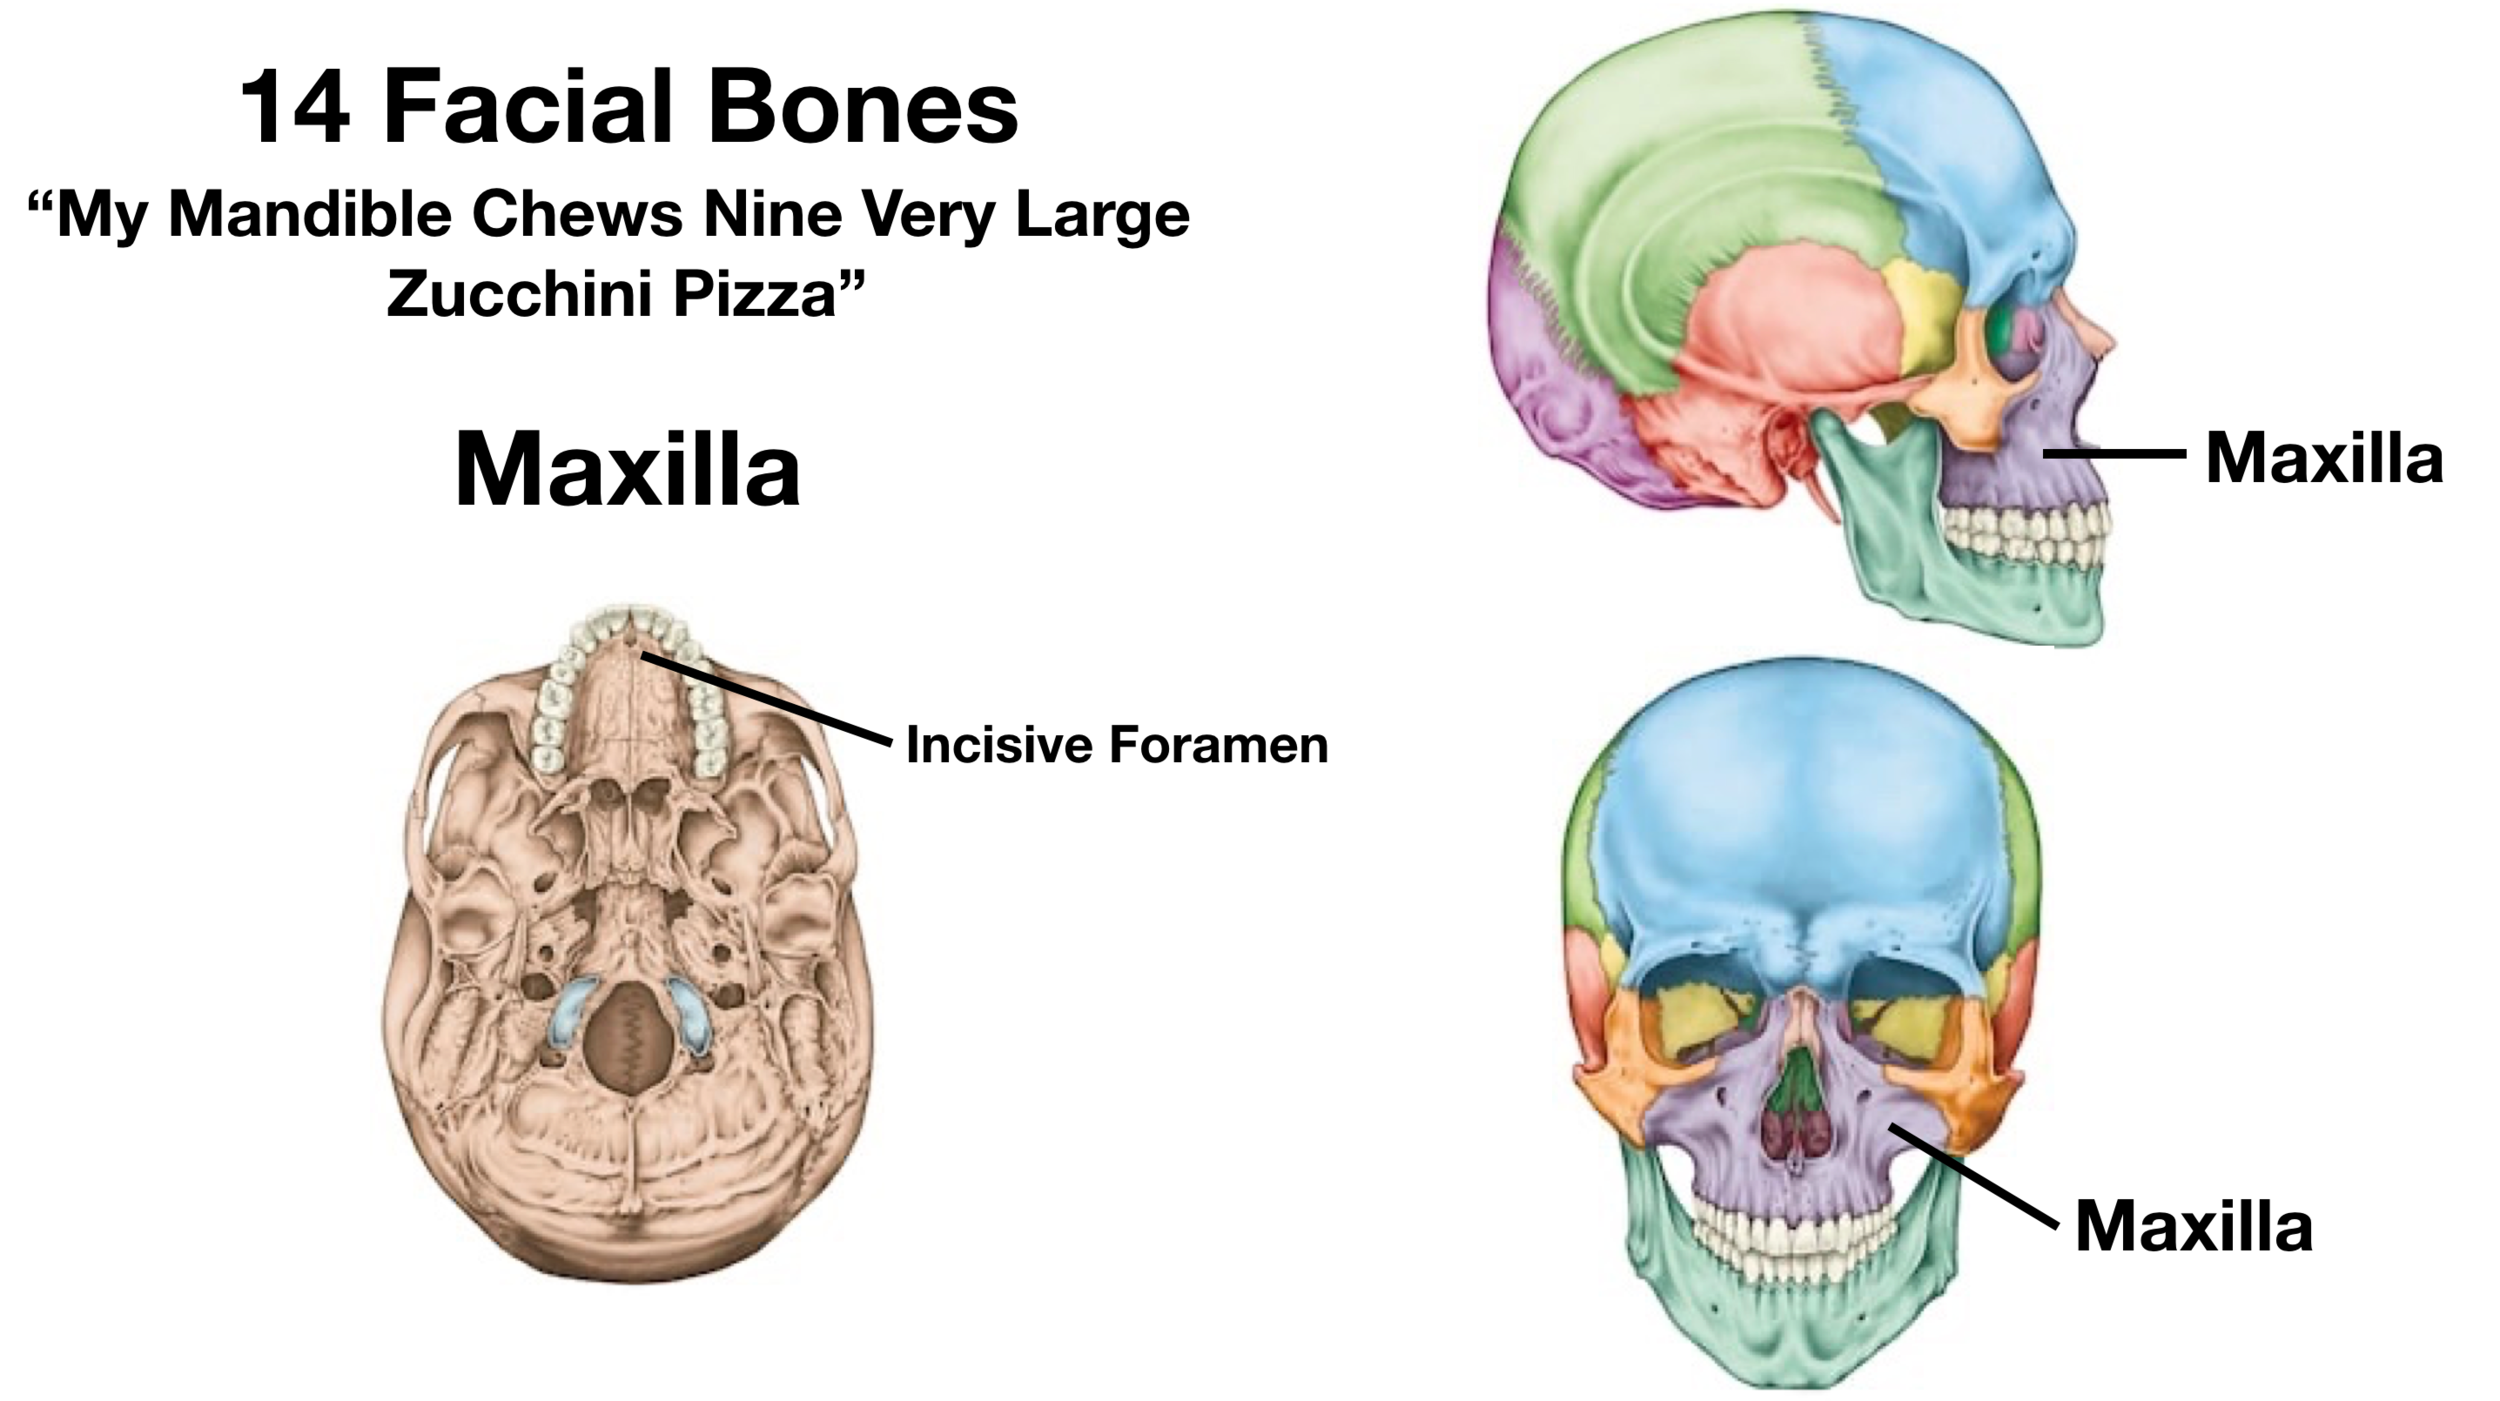 The Skull Bones - Orbital View